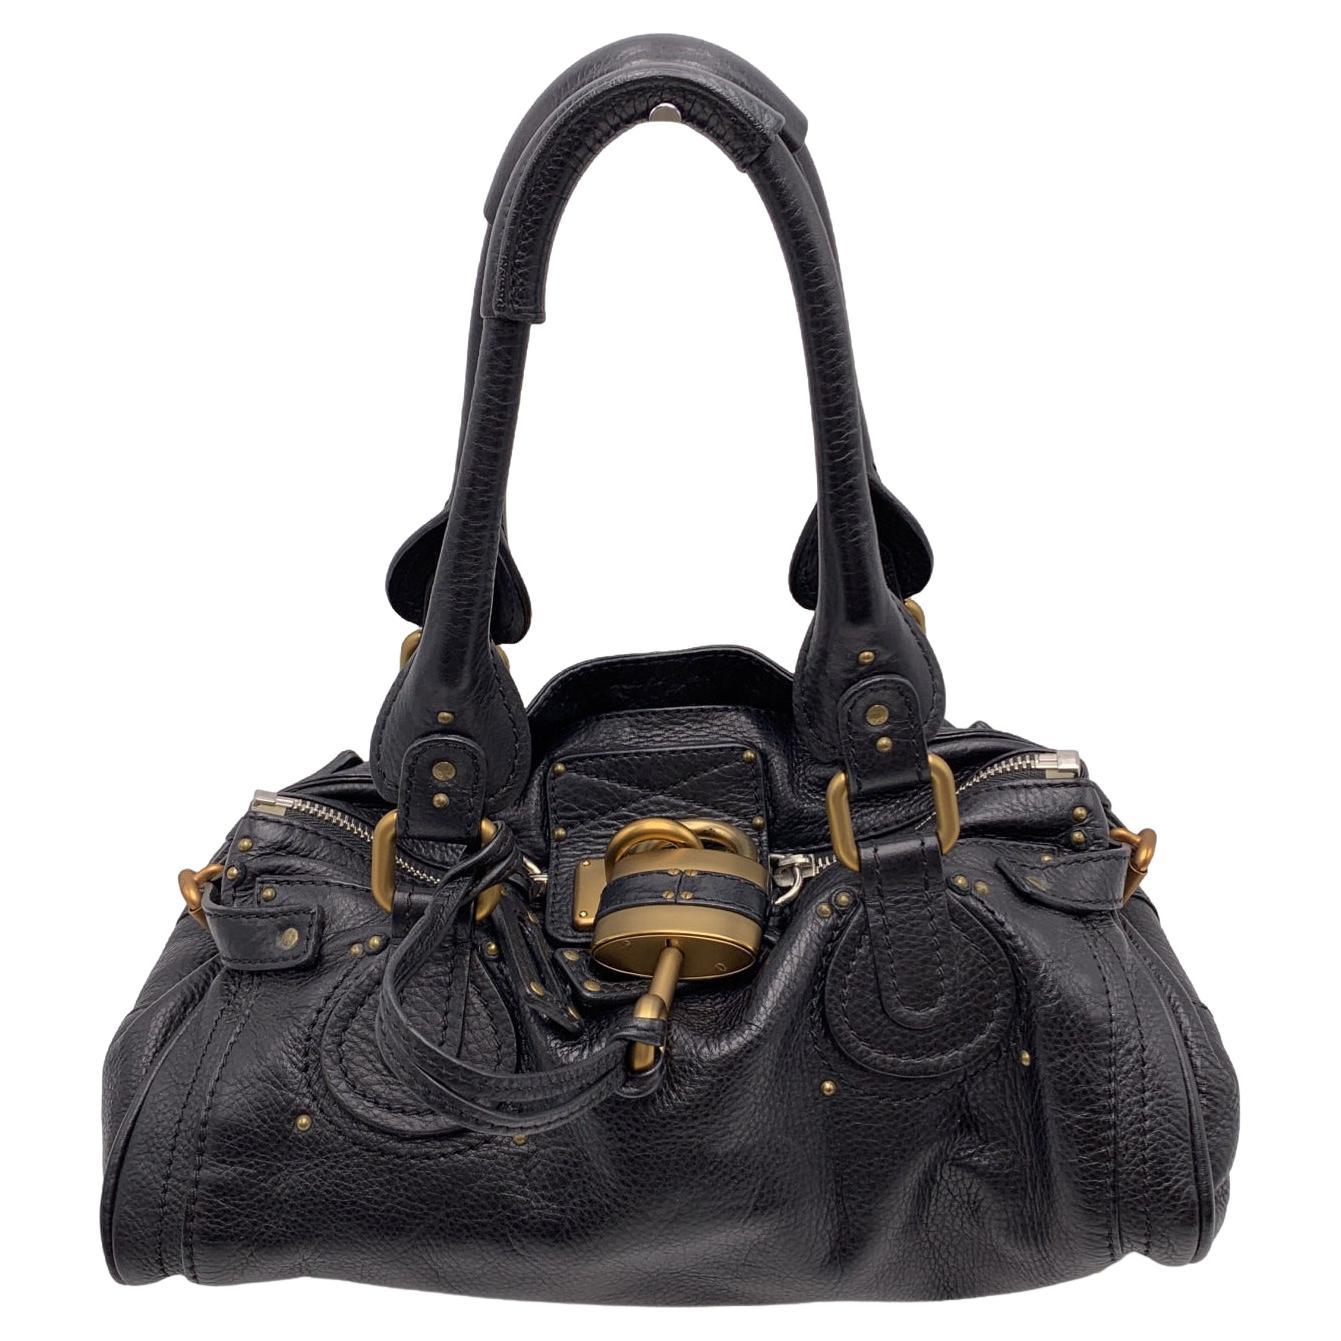 Chloe Black Leather Paddington Bag Tote Satchel Handbag